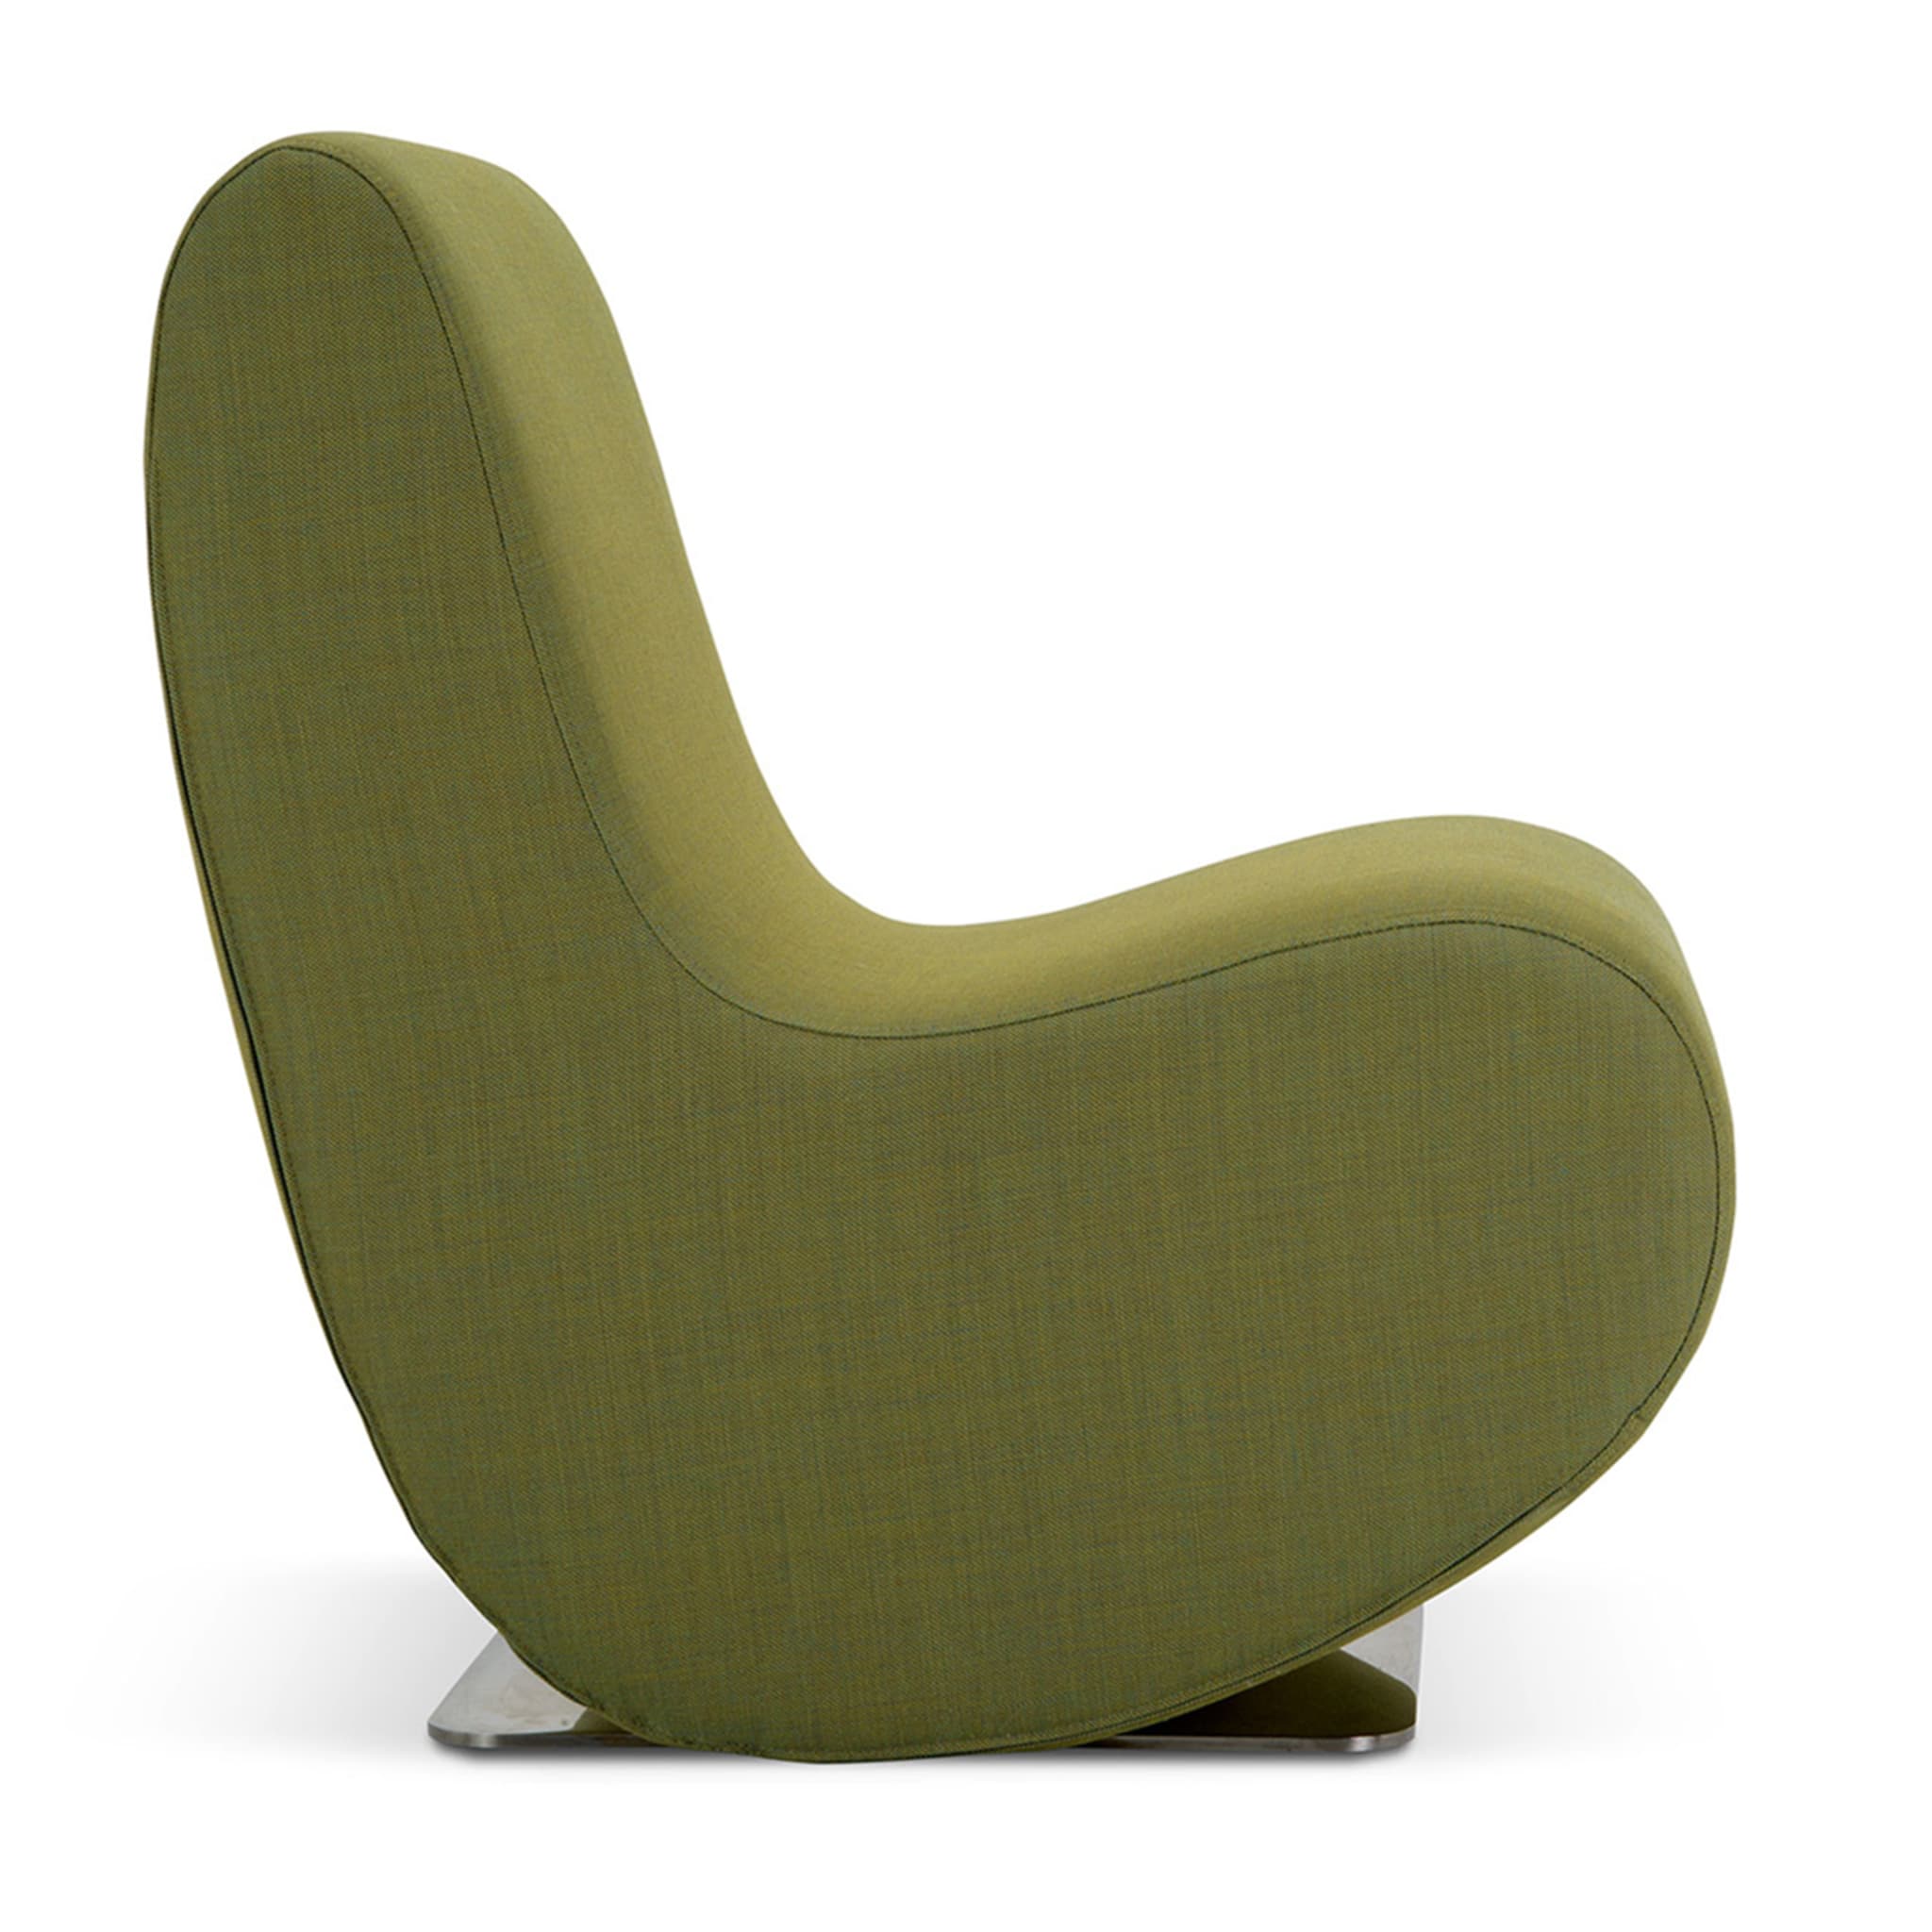 Nina Green Lounge Chair by Simone Micheli - Alternative view 3